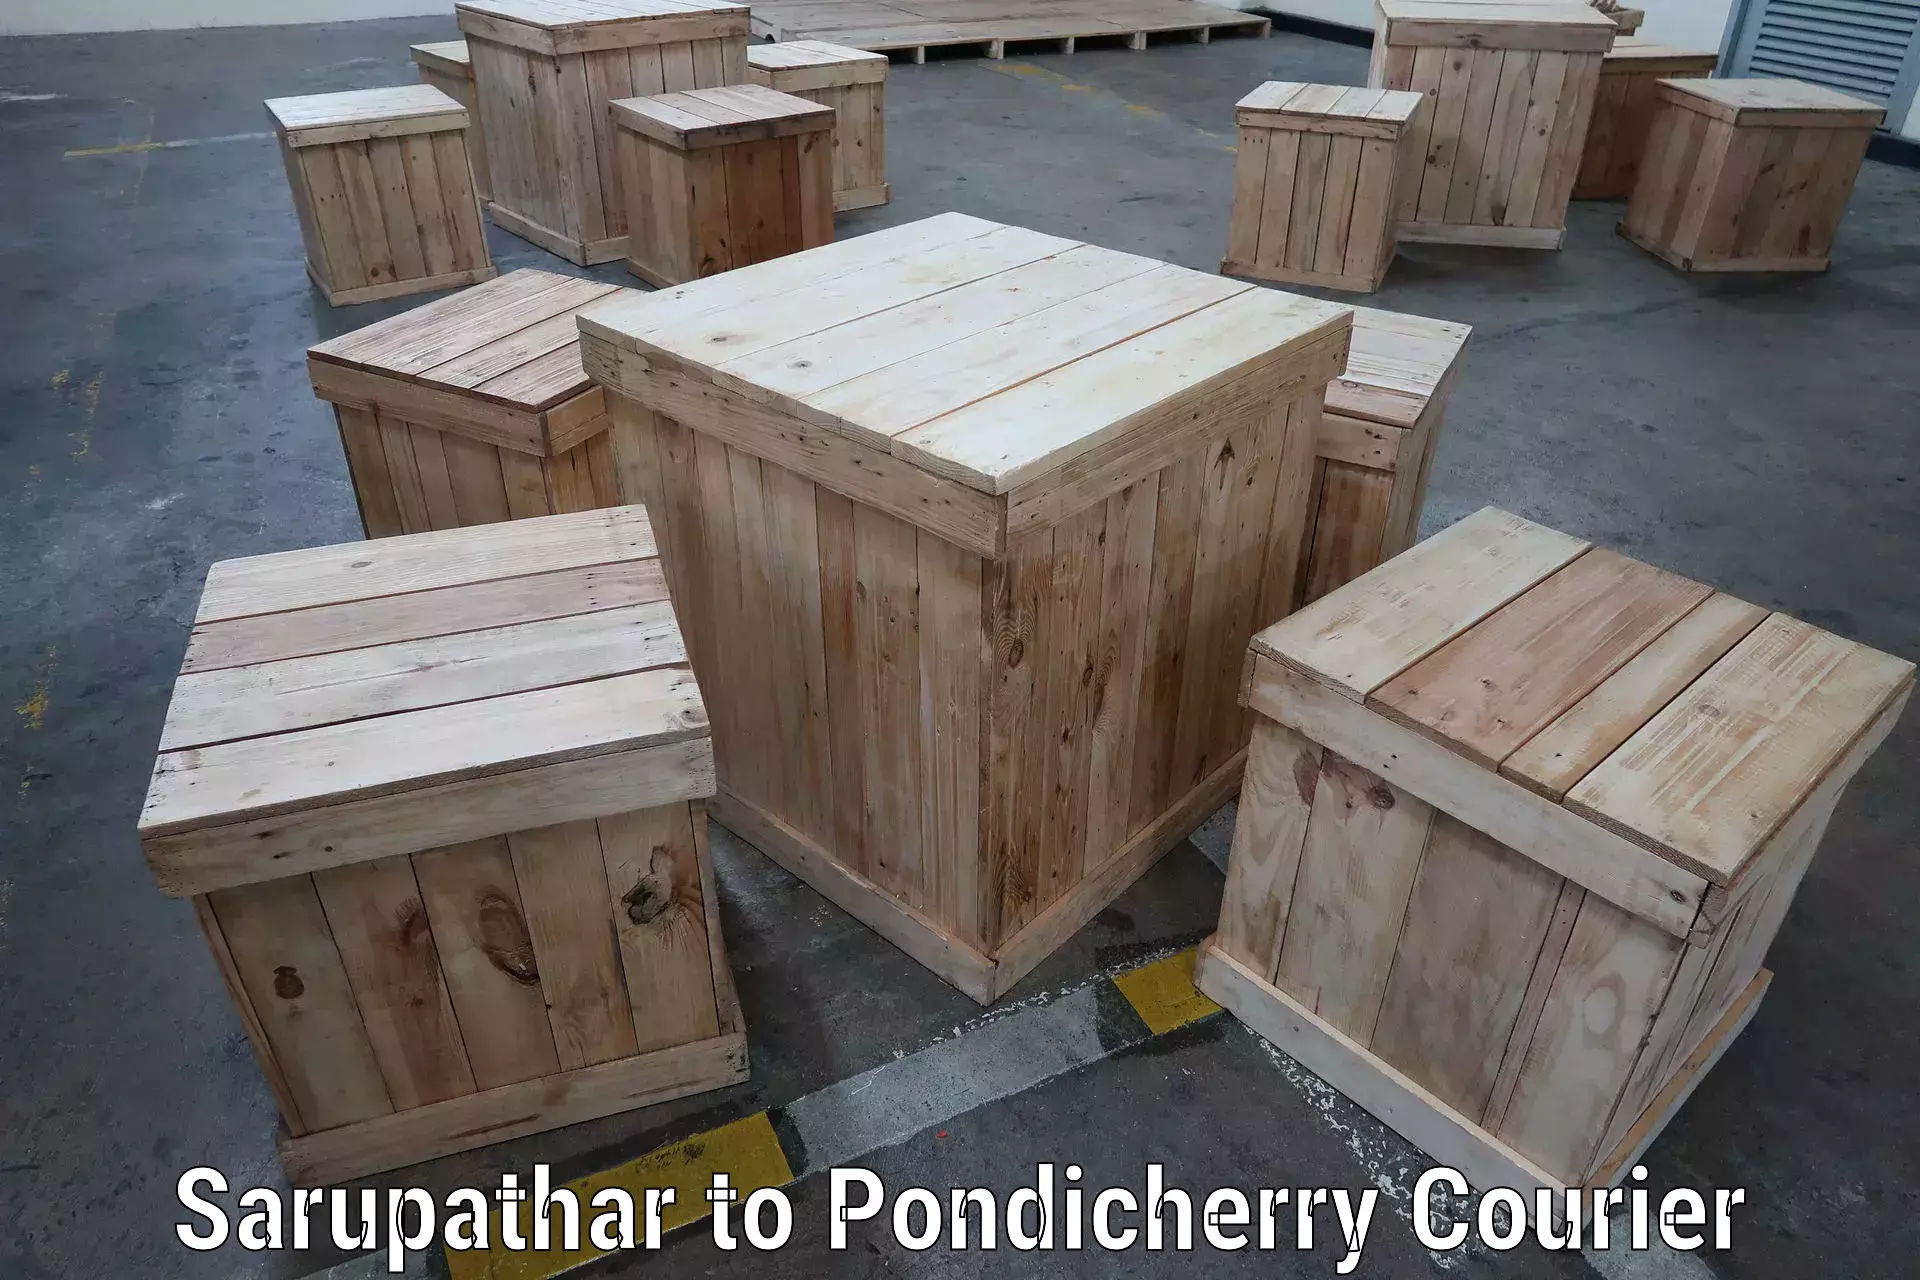 Supply chain efficiency Sarupathar to Pondicherry